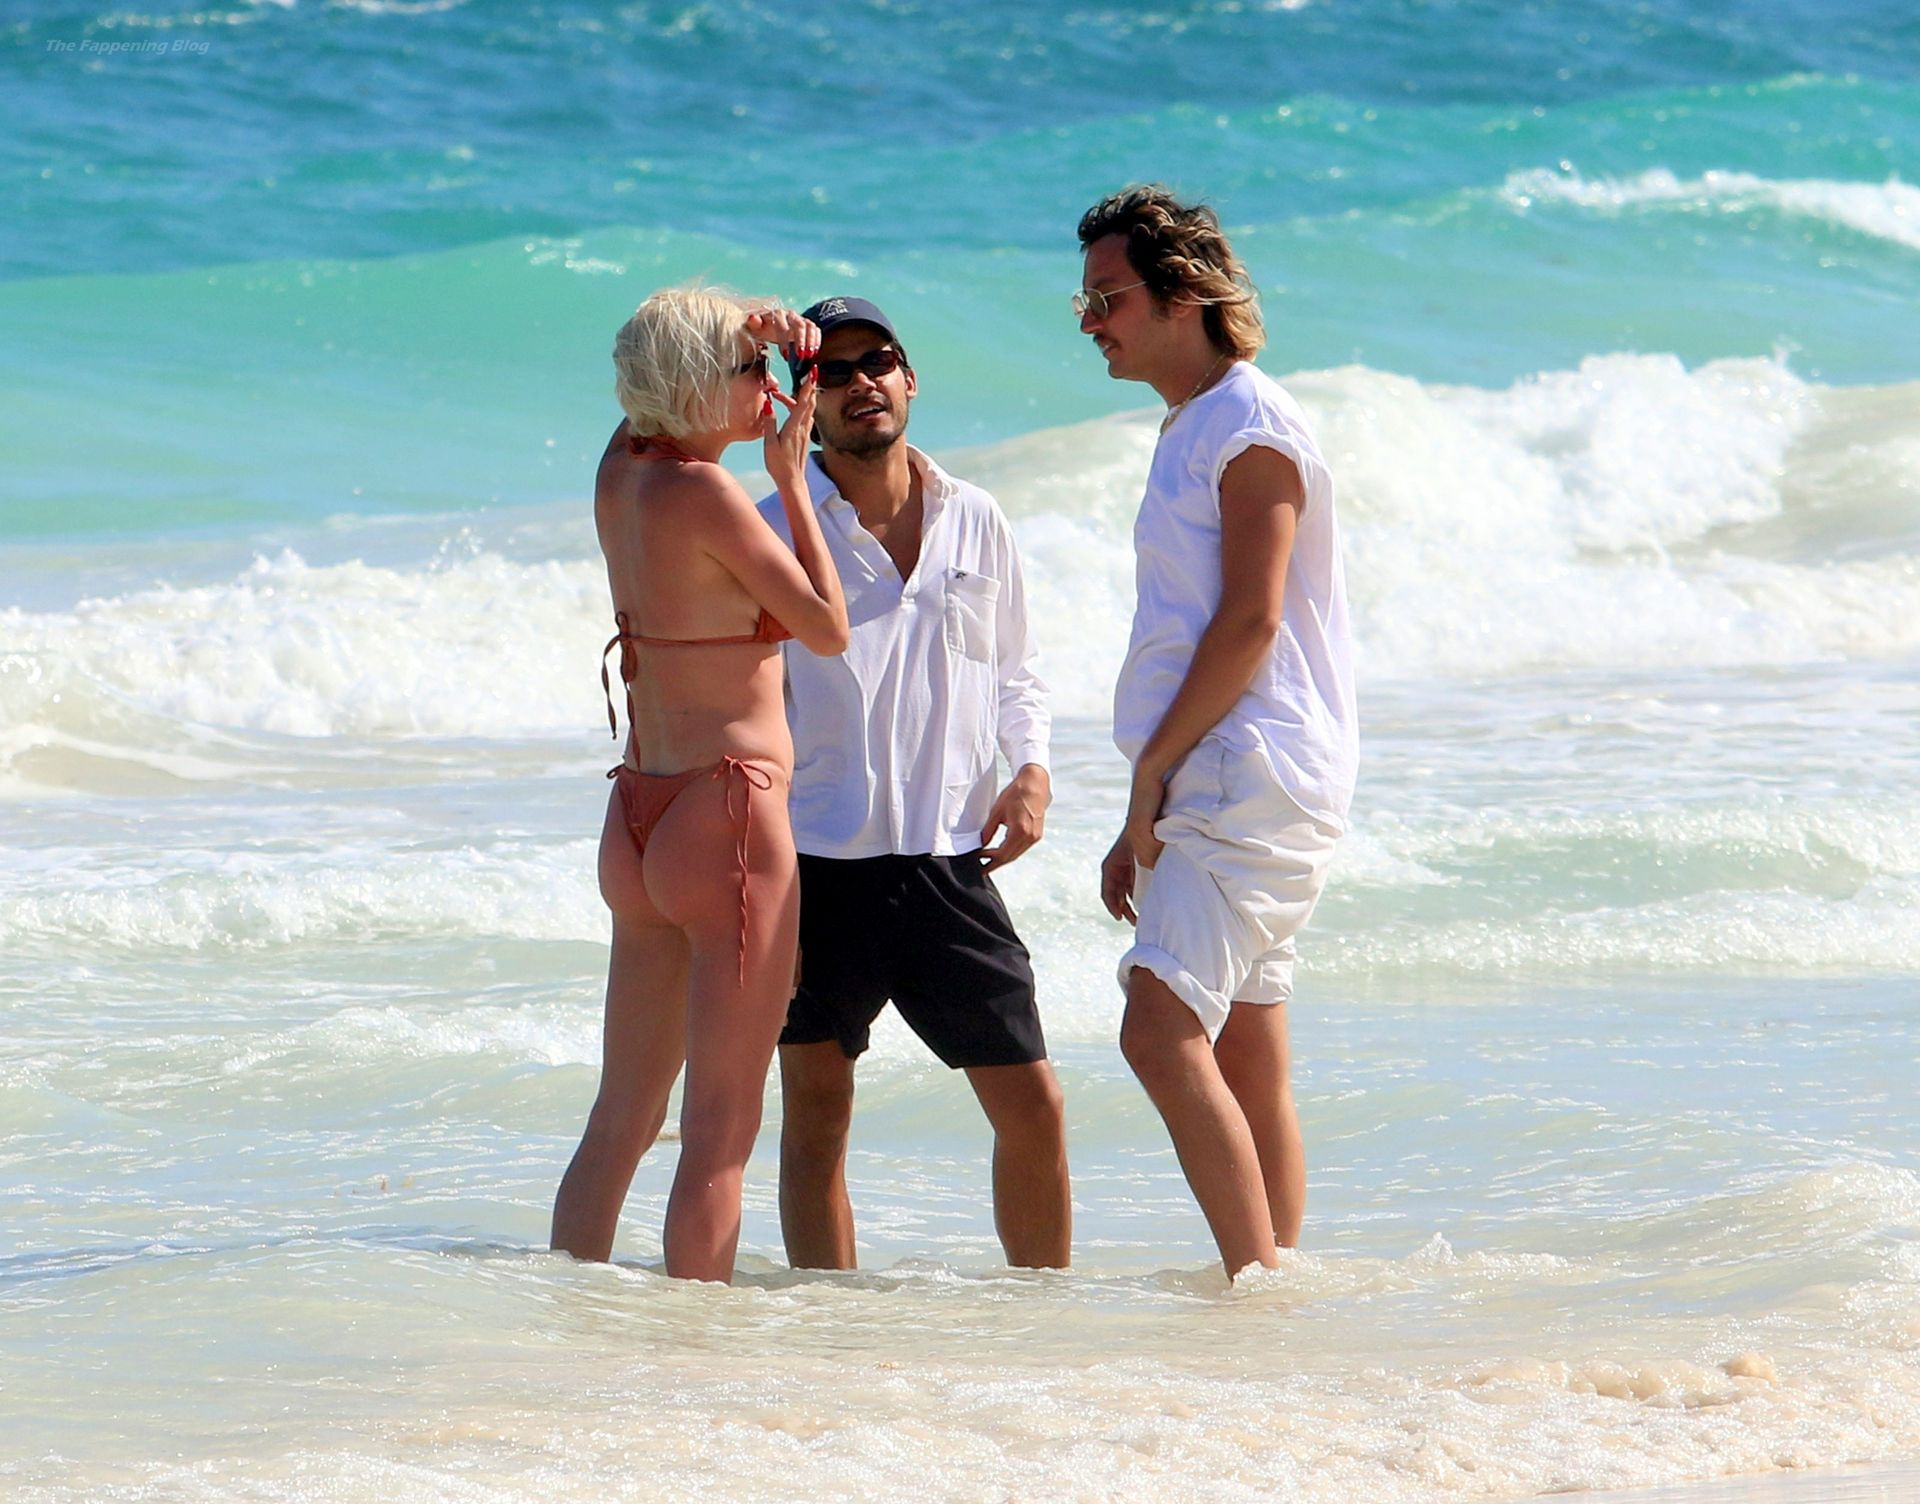 Caroline Vreeland Flaunts Her Boobs on the Beach in Mexico (72 Photos)